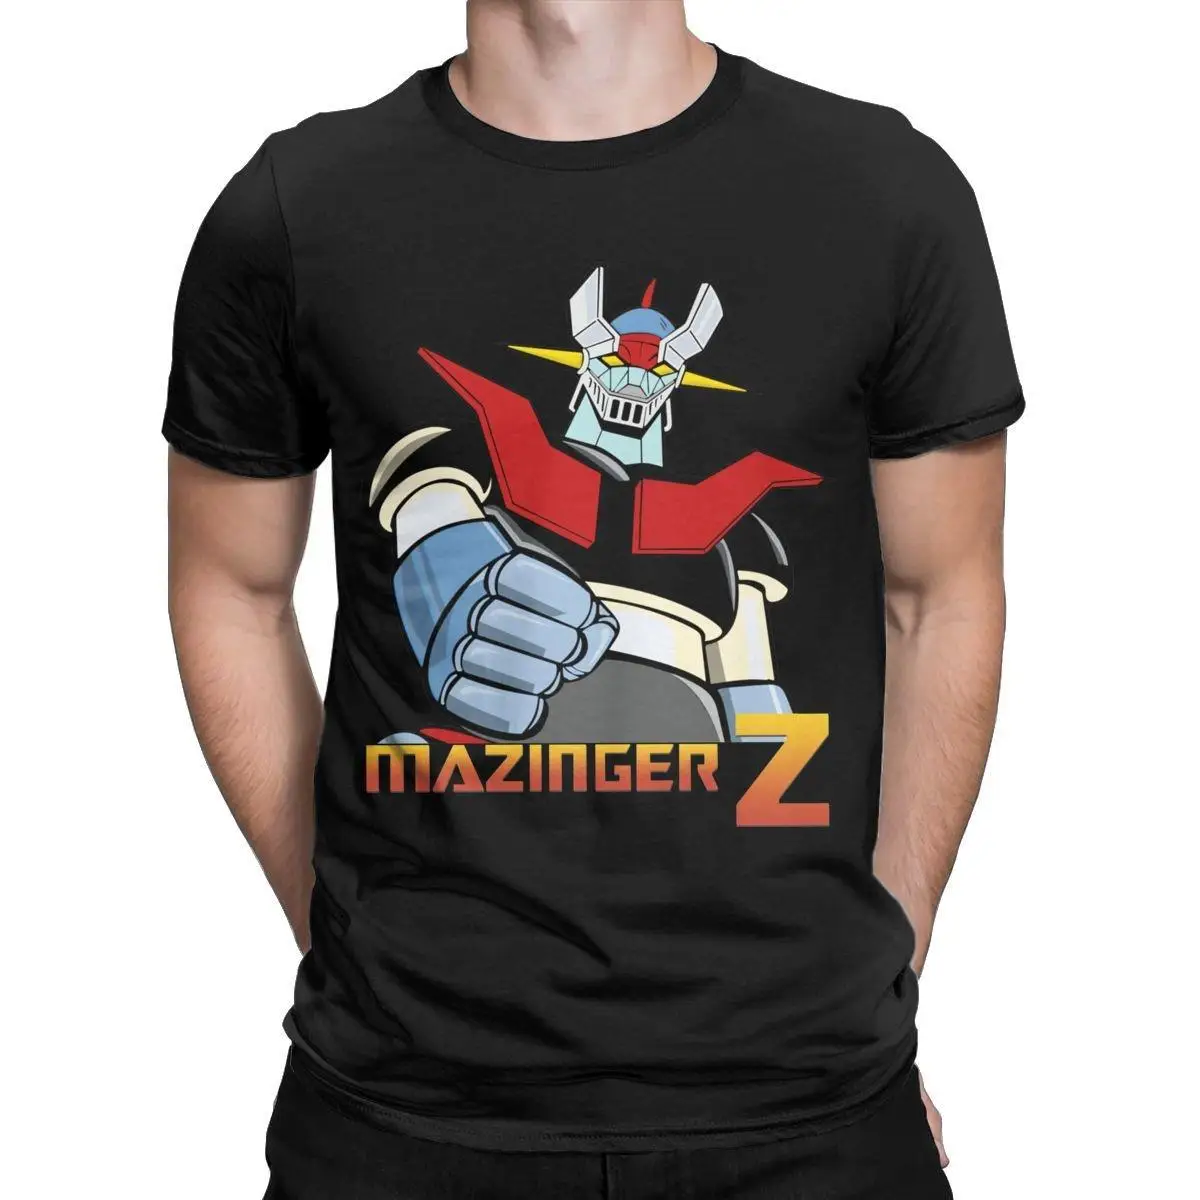 Mazinger Z Anime Robot T-Shirt for Men Leisure Pure Cotton Tee Shirt Round Neck Short Sleeve T Shirt Gift Idea Clothes